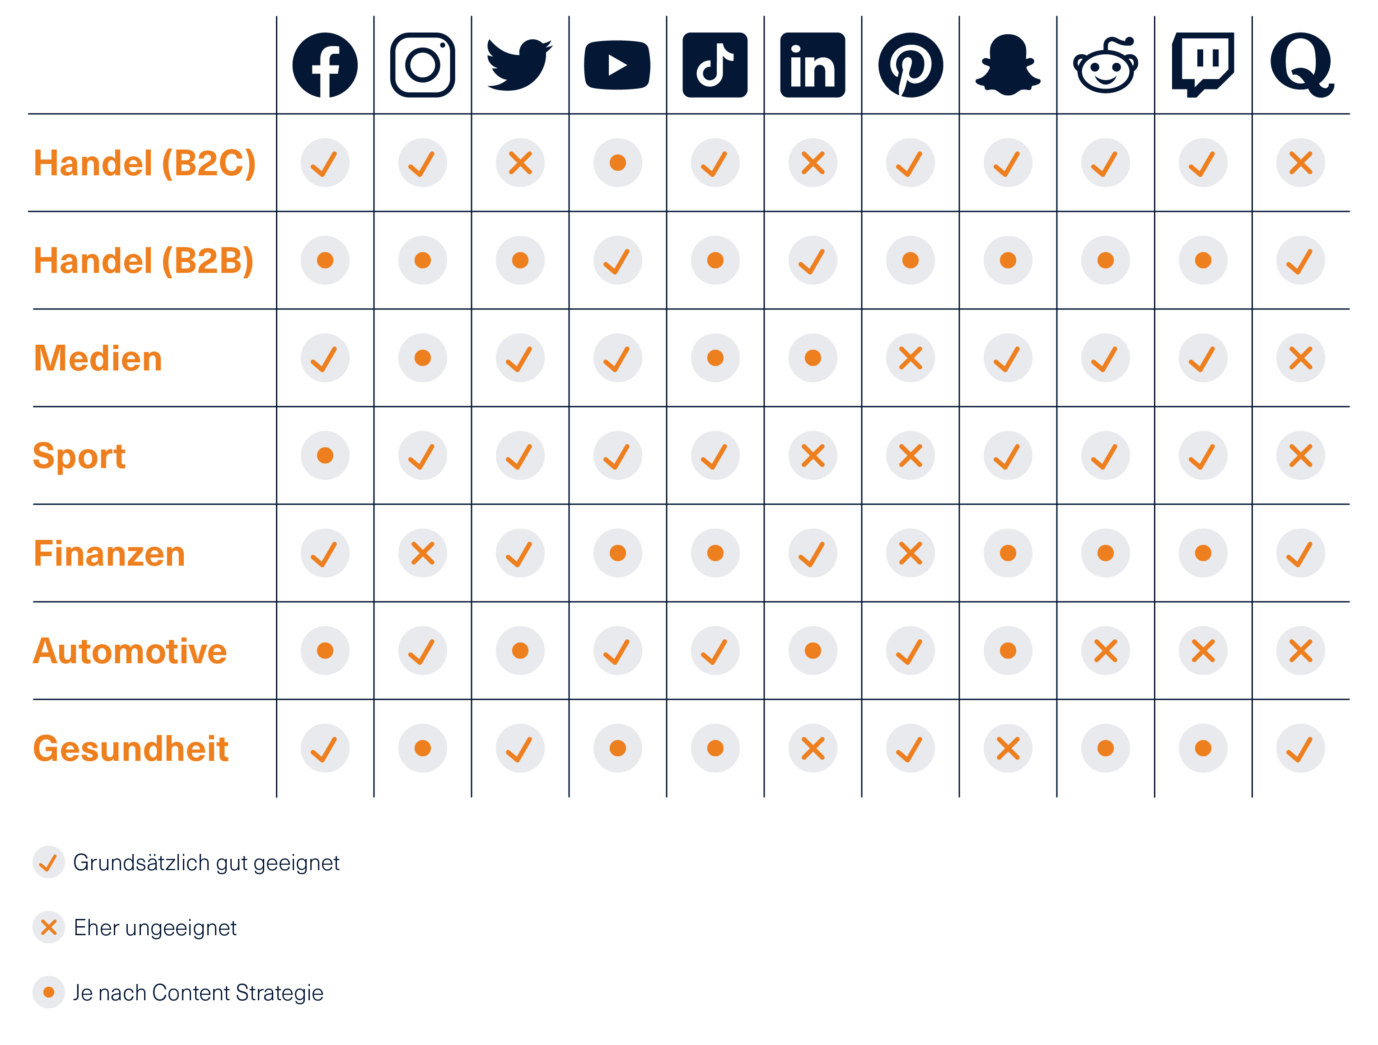 Tabelle der Social-Media-Kanäle & dazu passende Branchen 